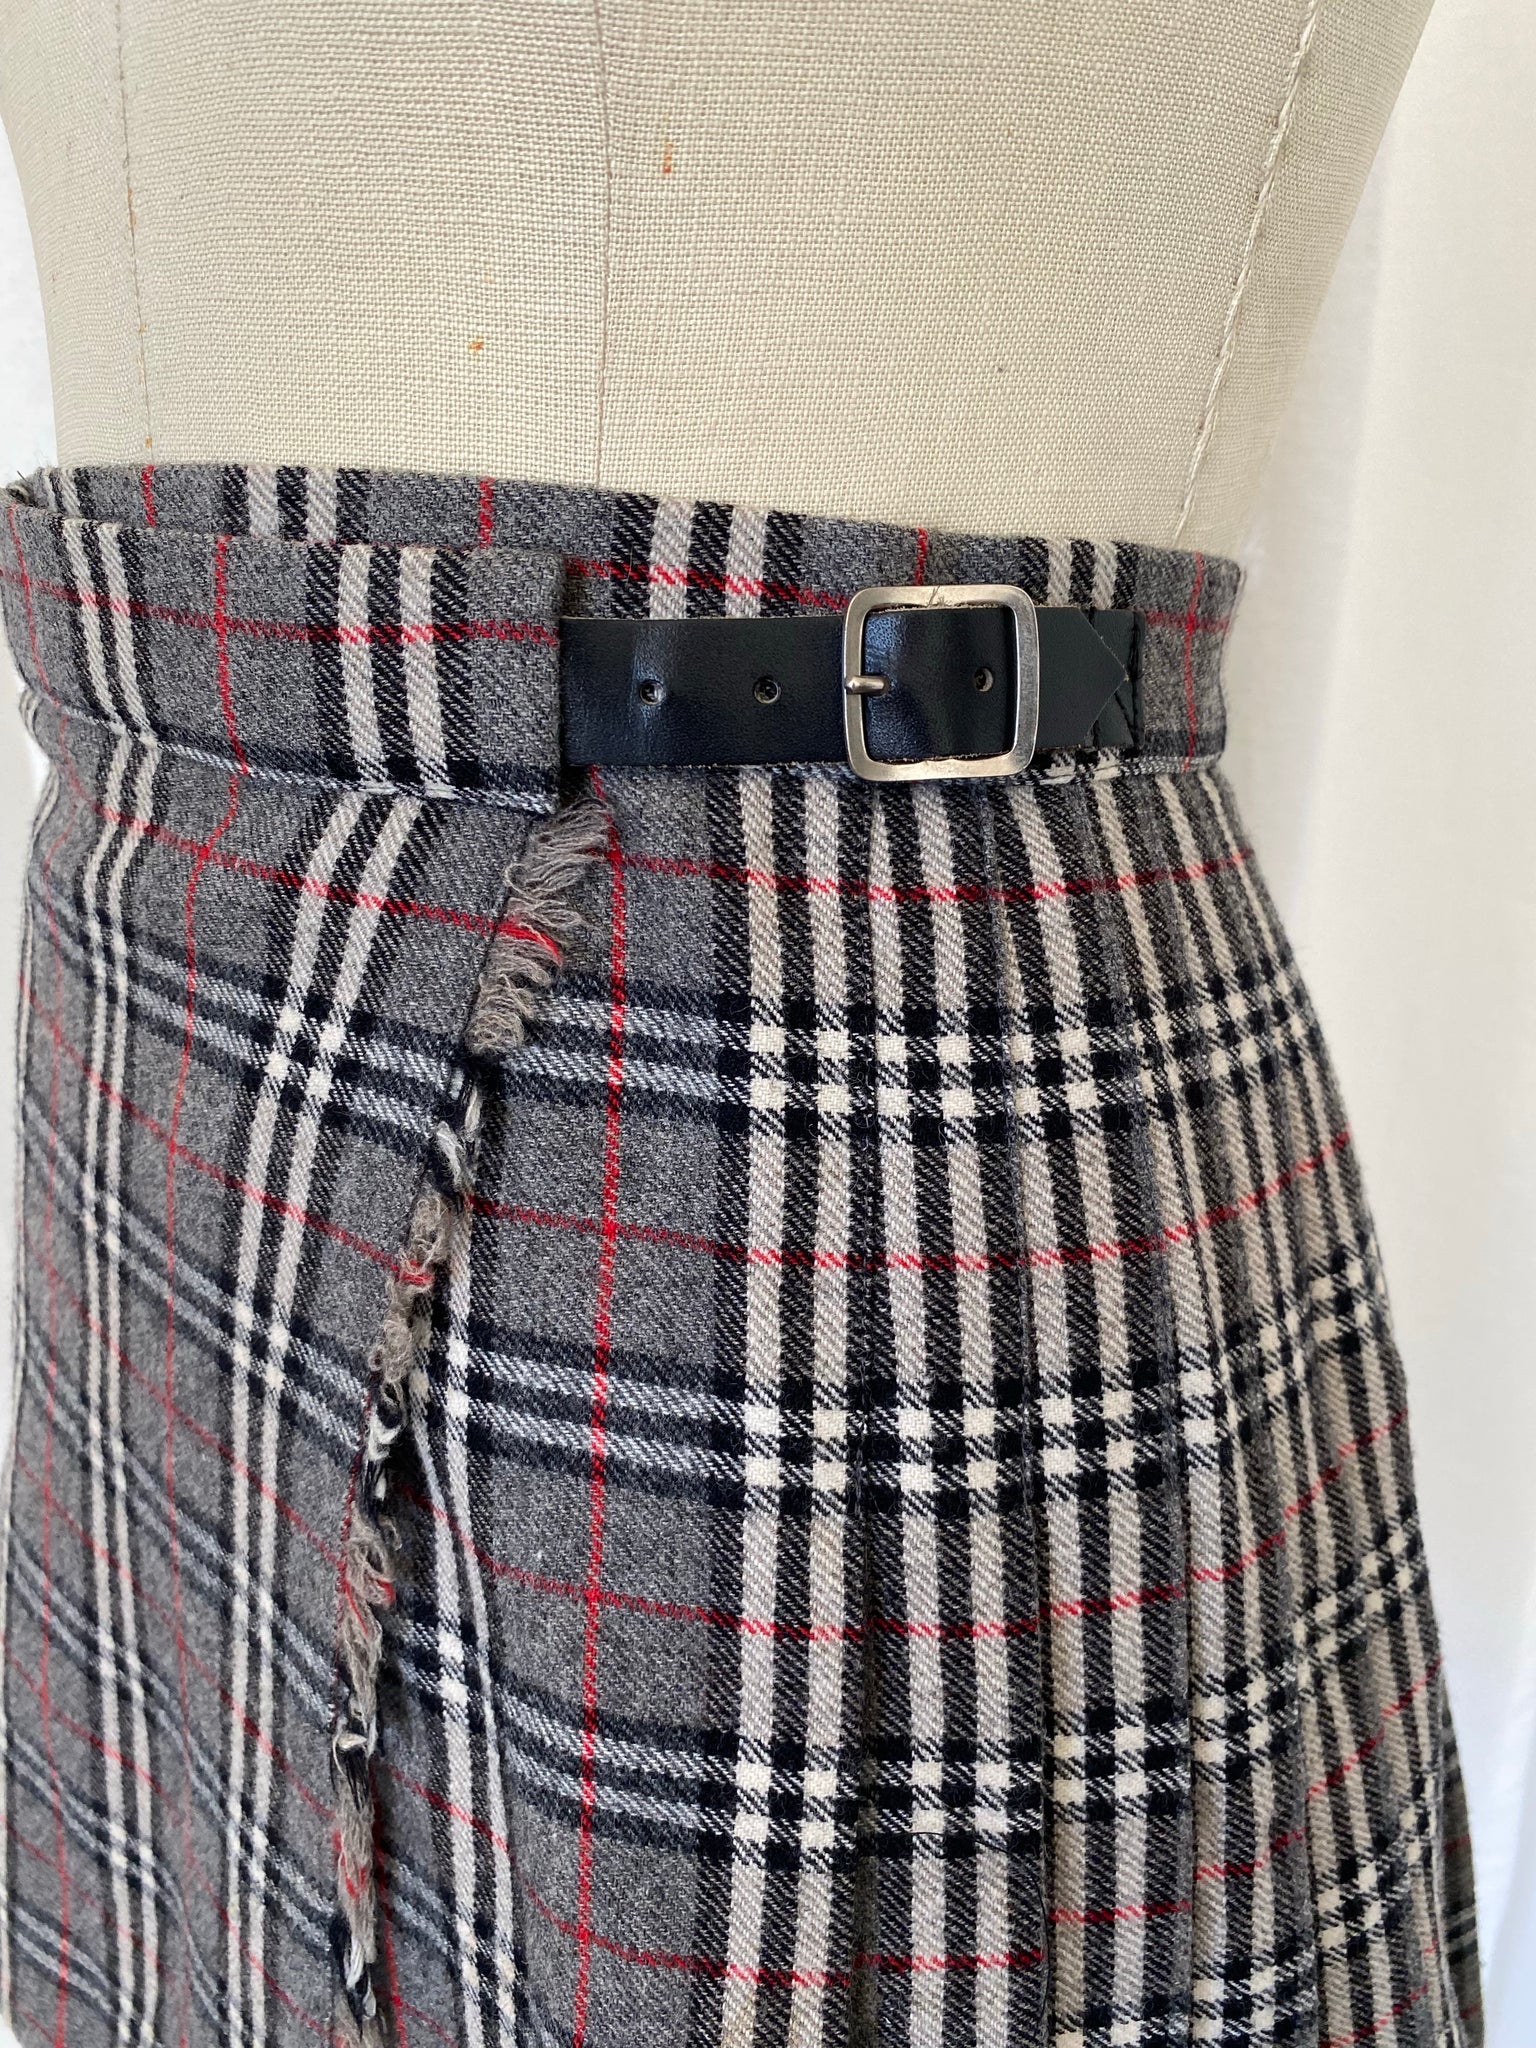 Burberry Plaid Skirt